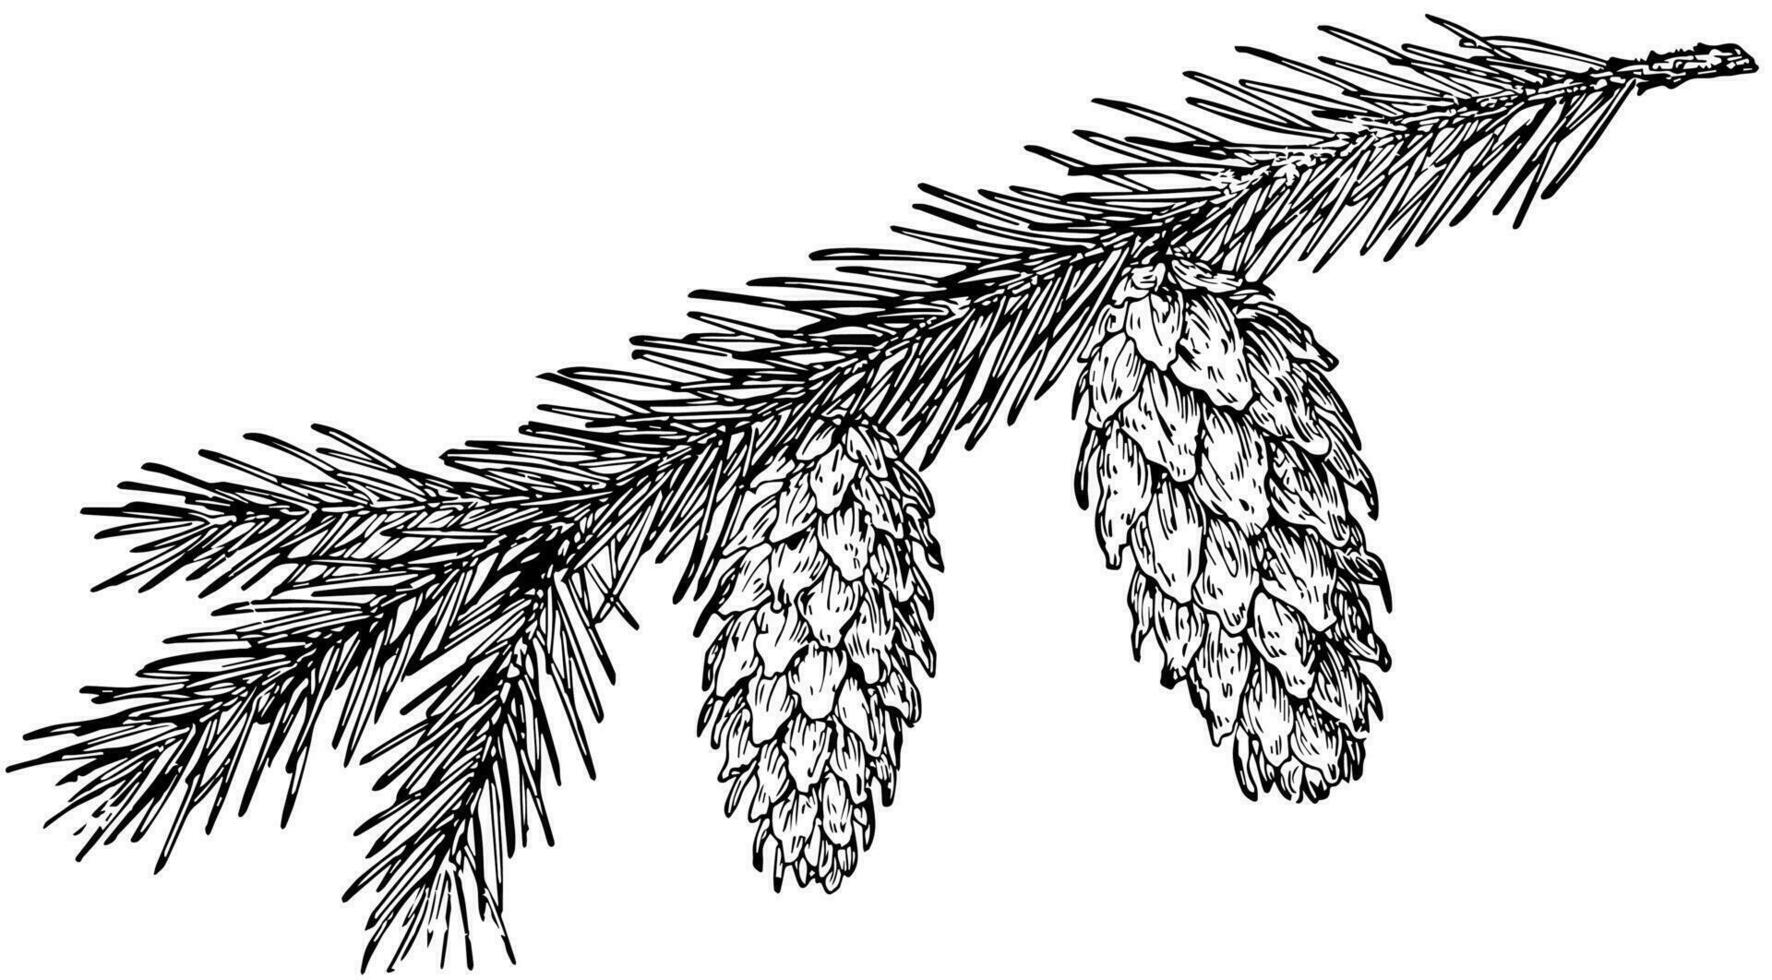 Engelmann Spruce Pine Cone vintage illustration. vector